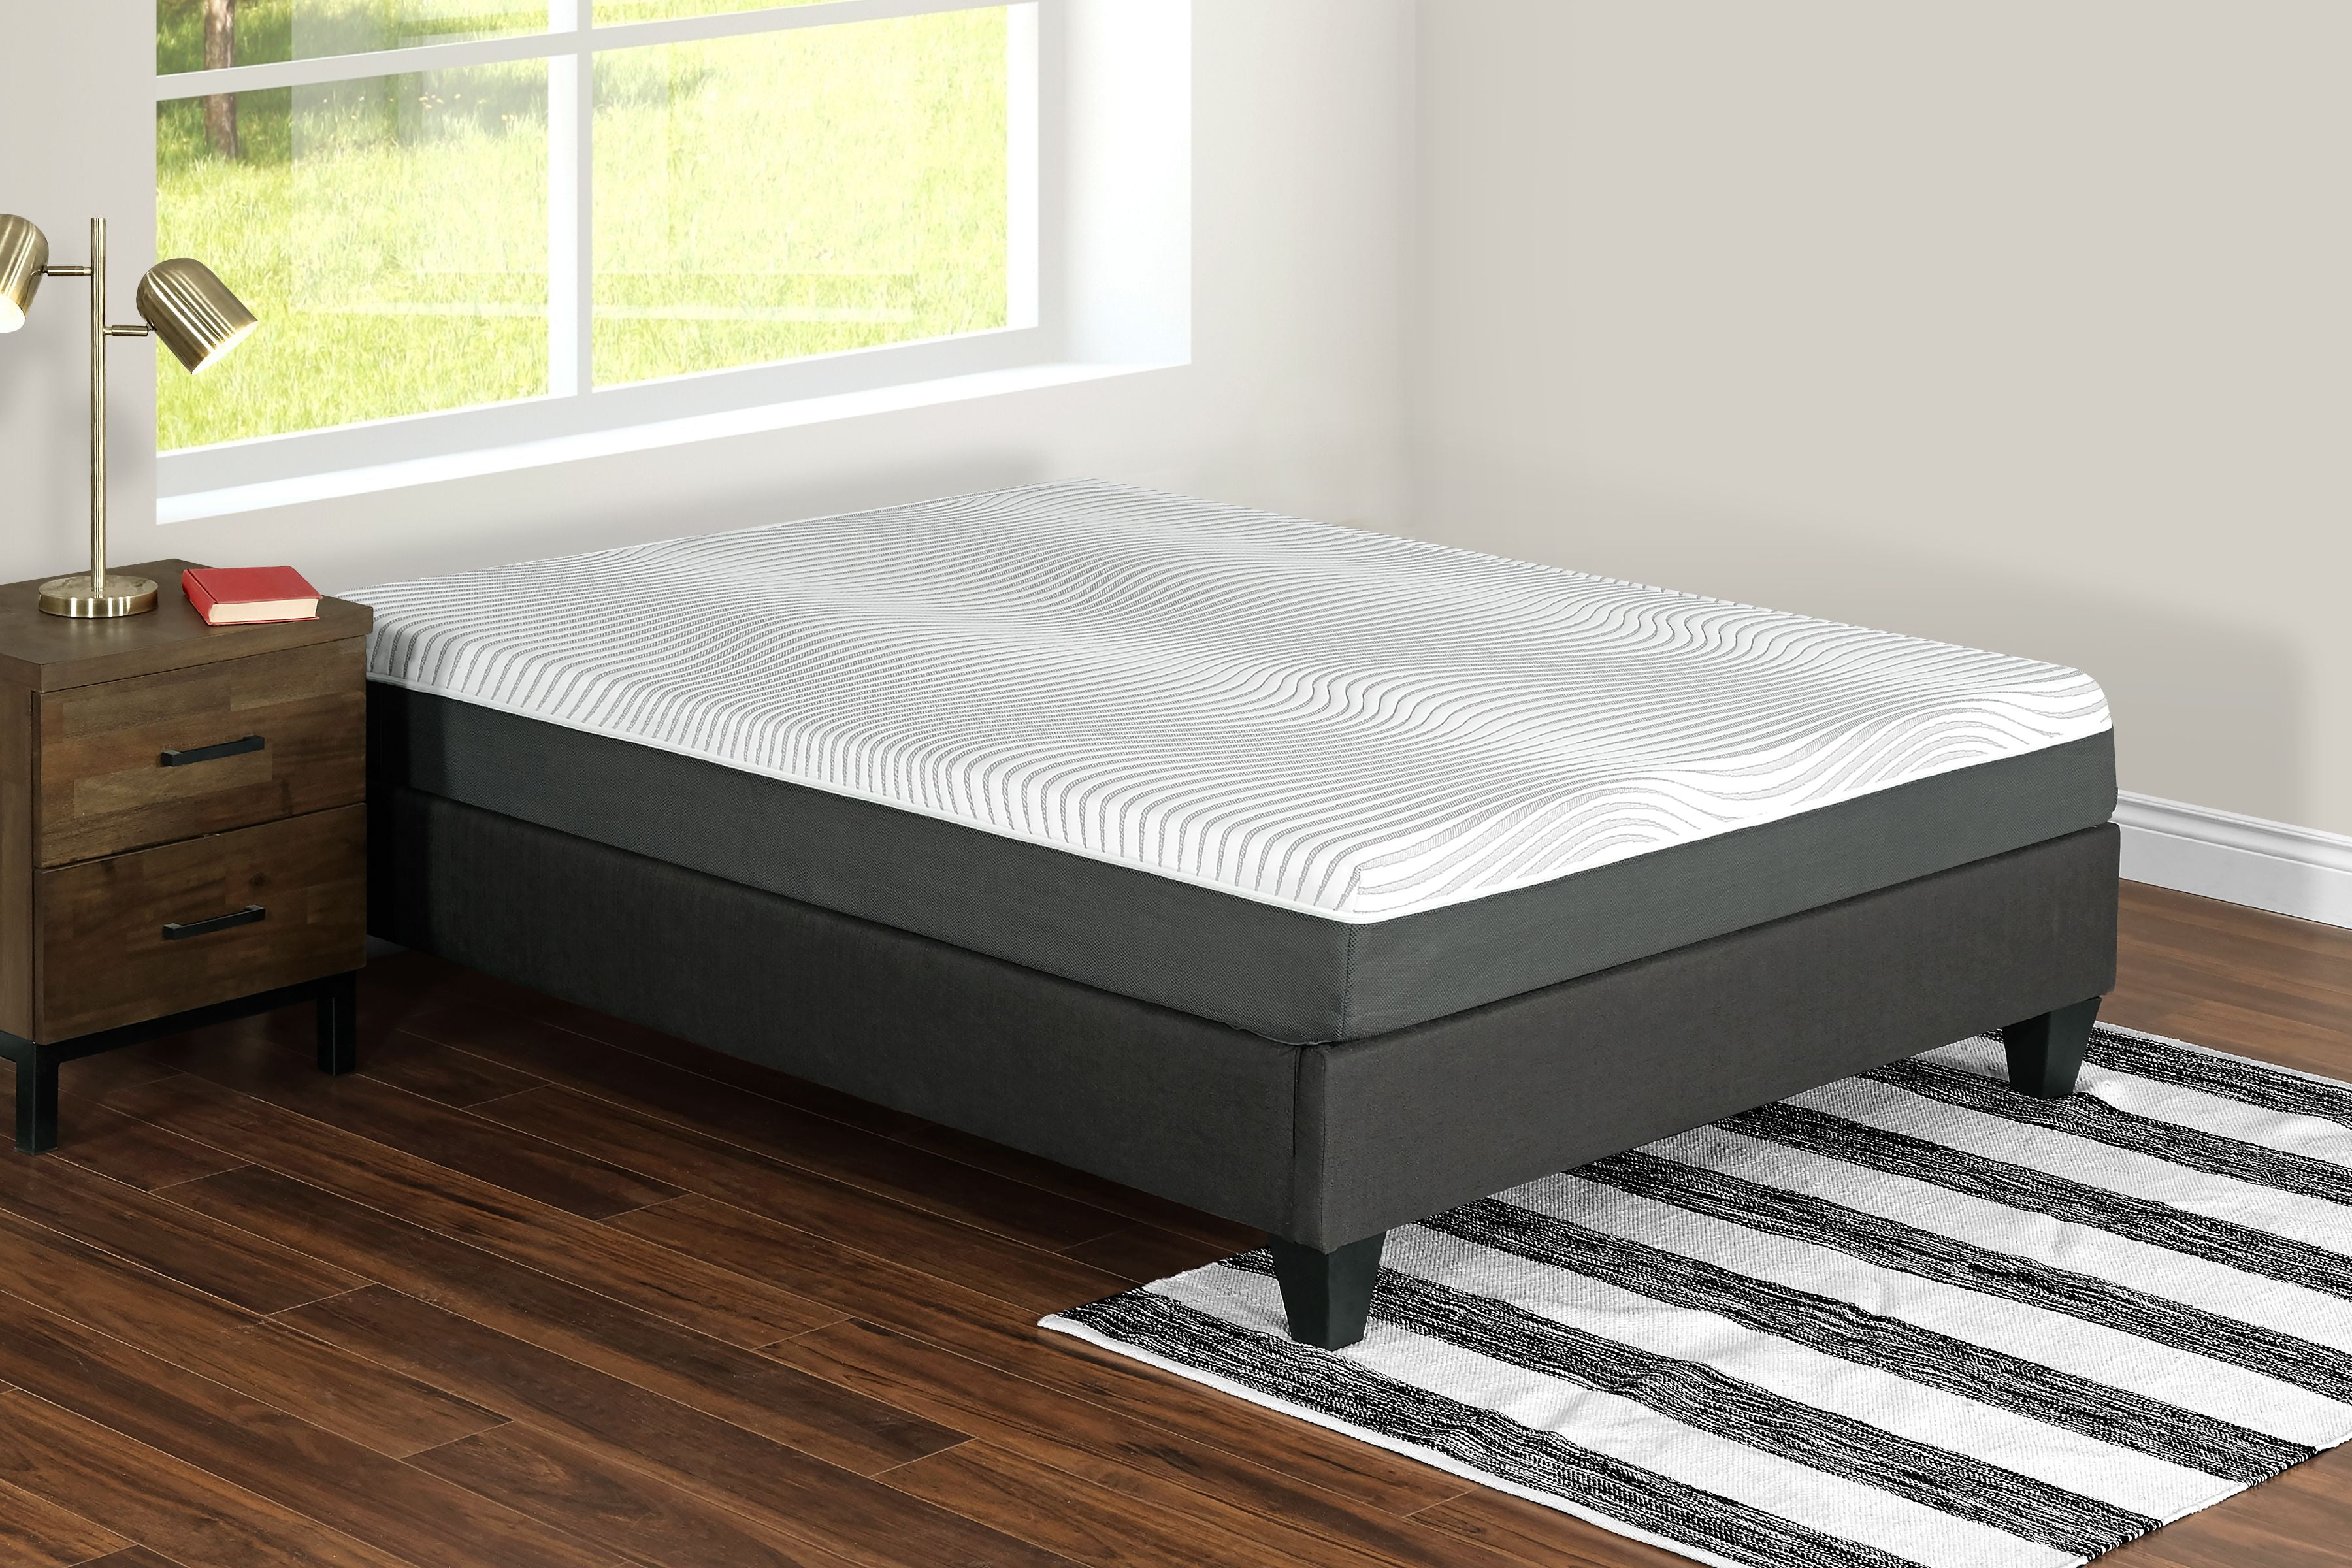 primo international mandy firm mattress specifications